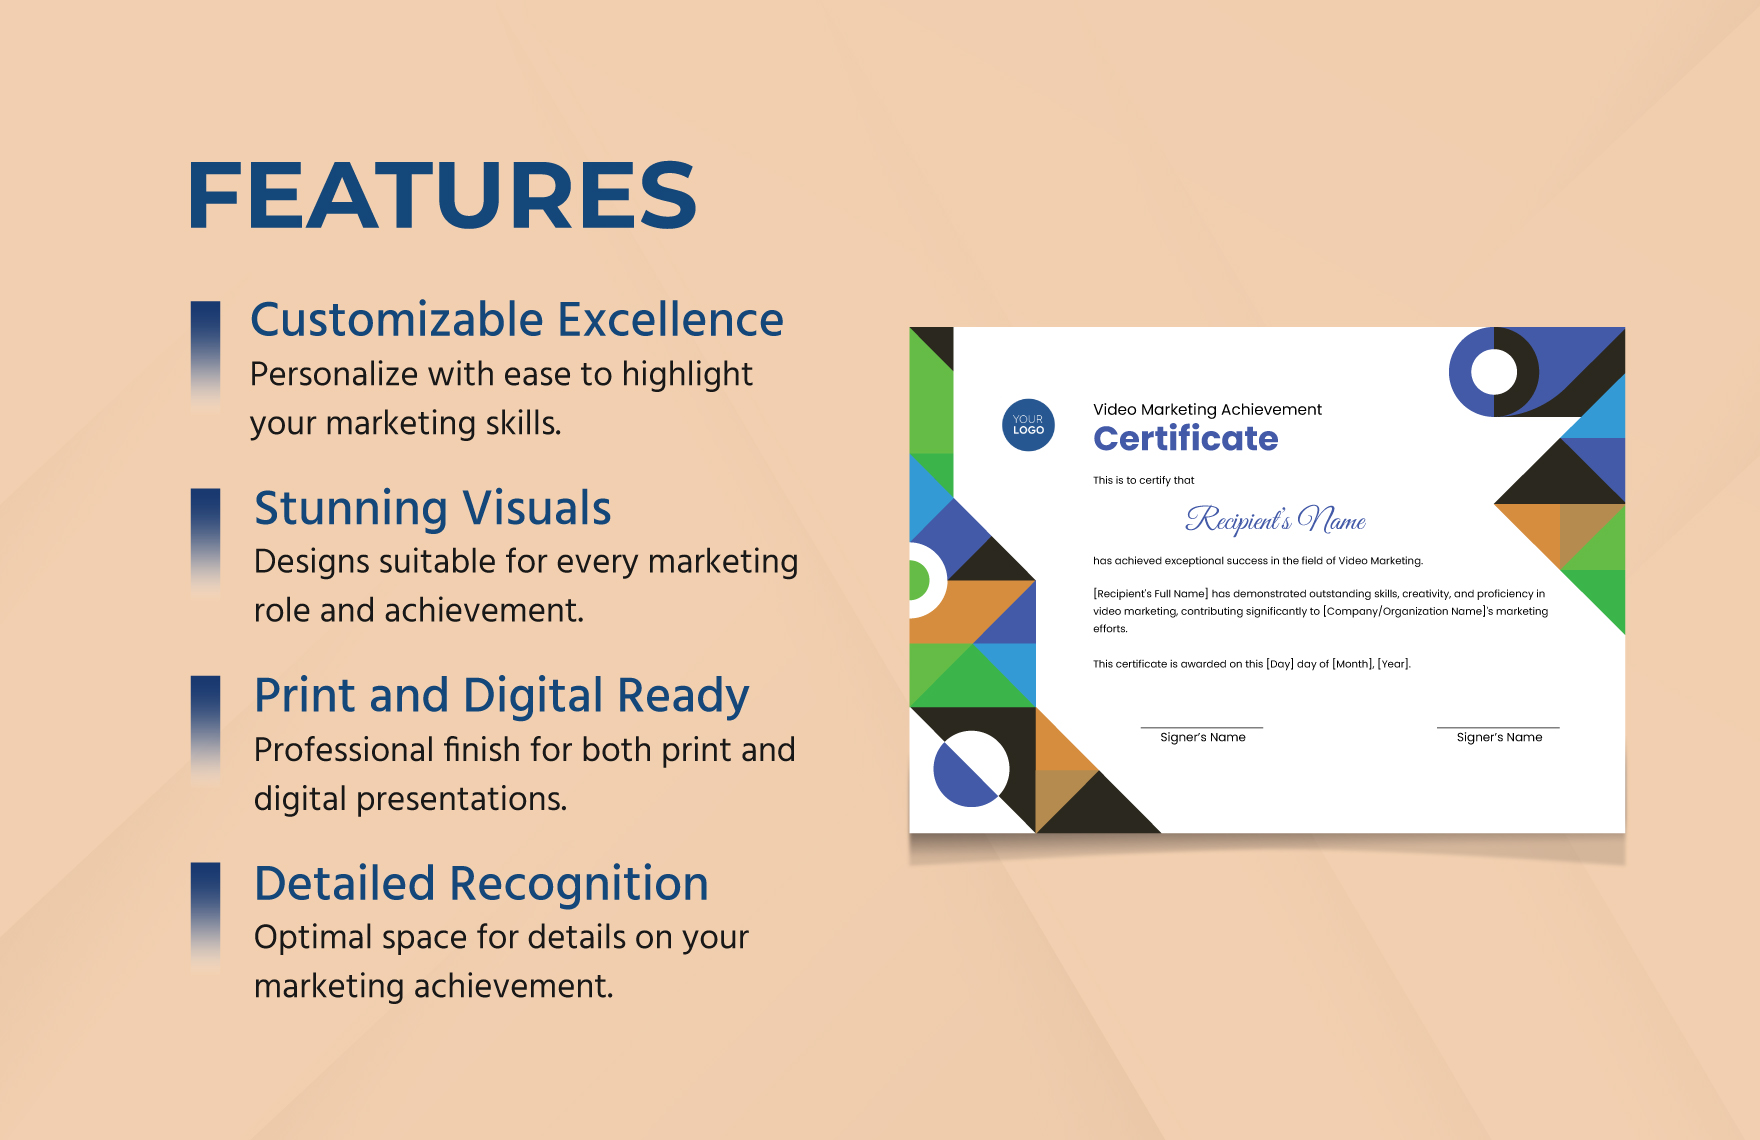 Video Marketing Achievement Certificate Template